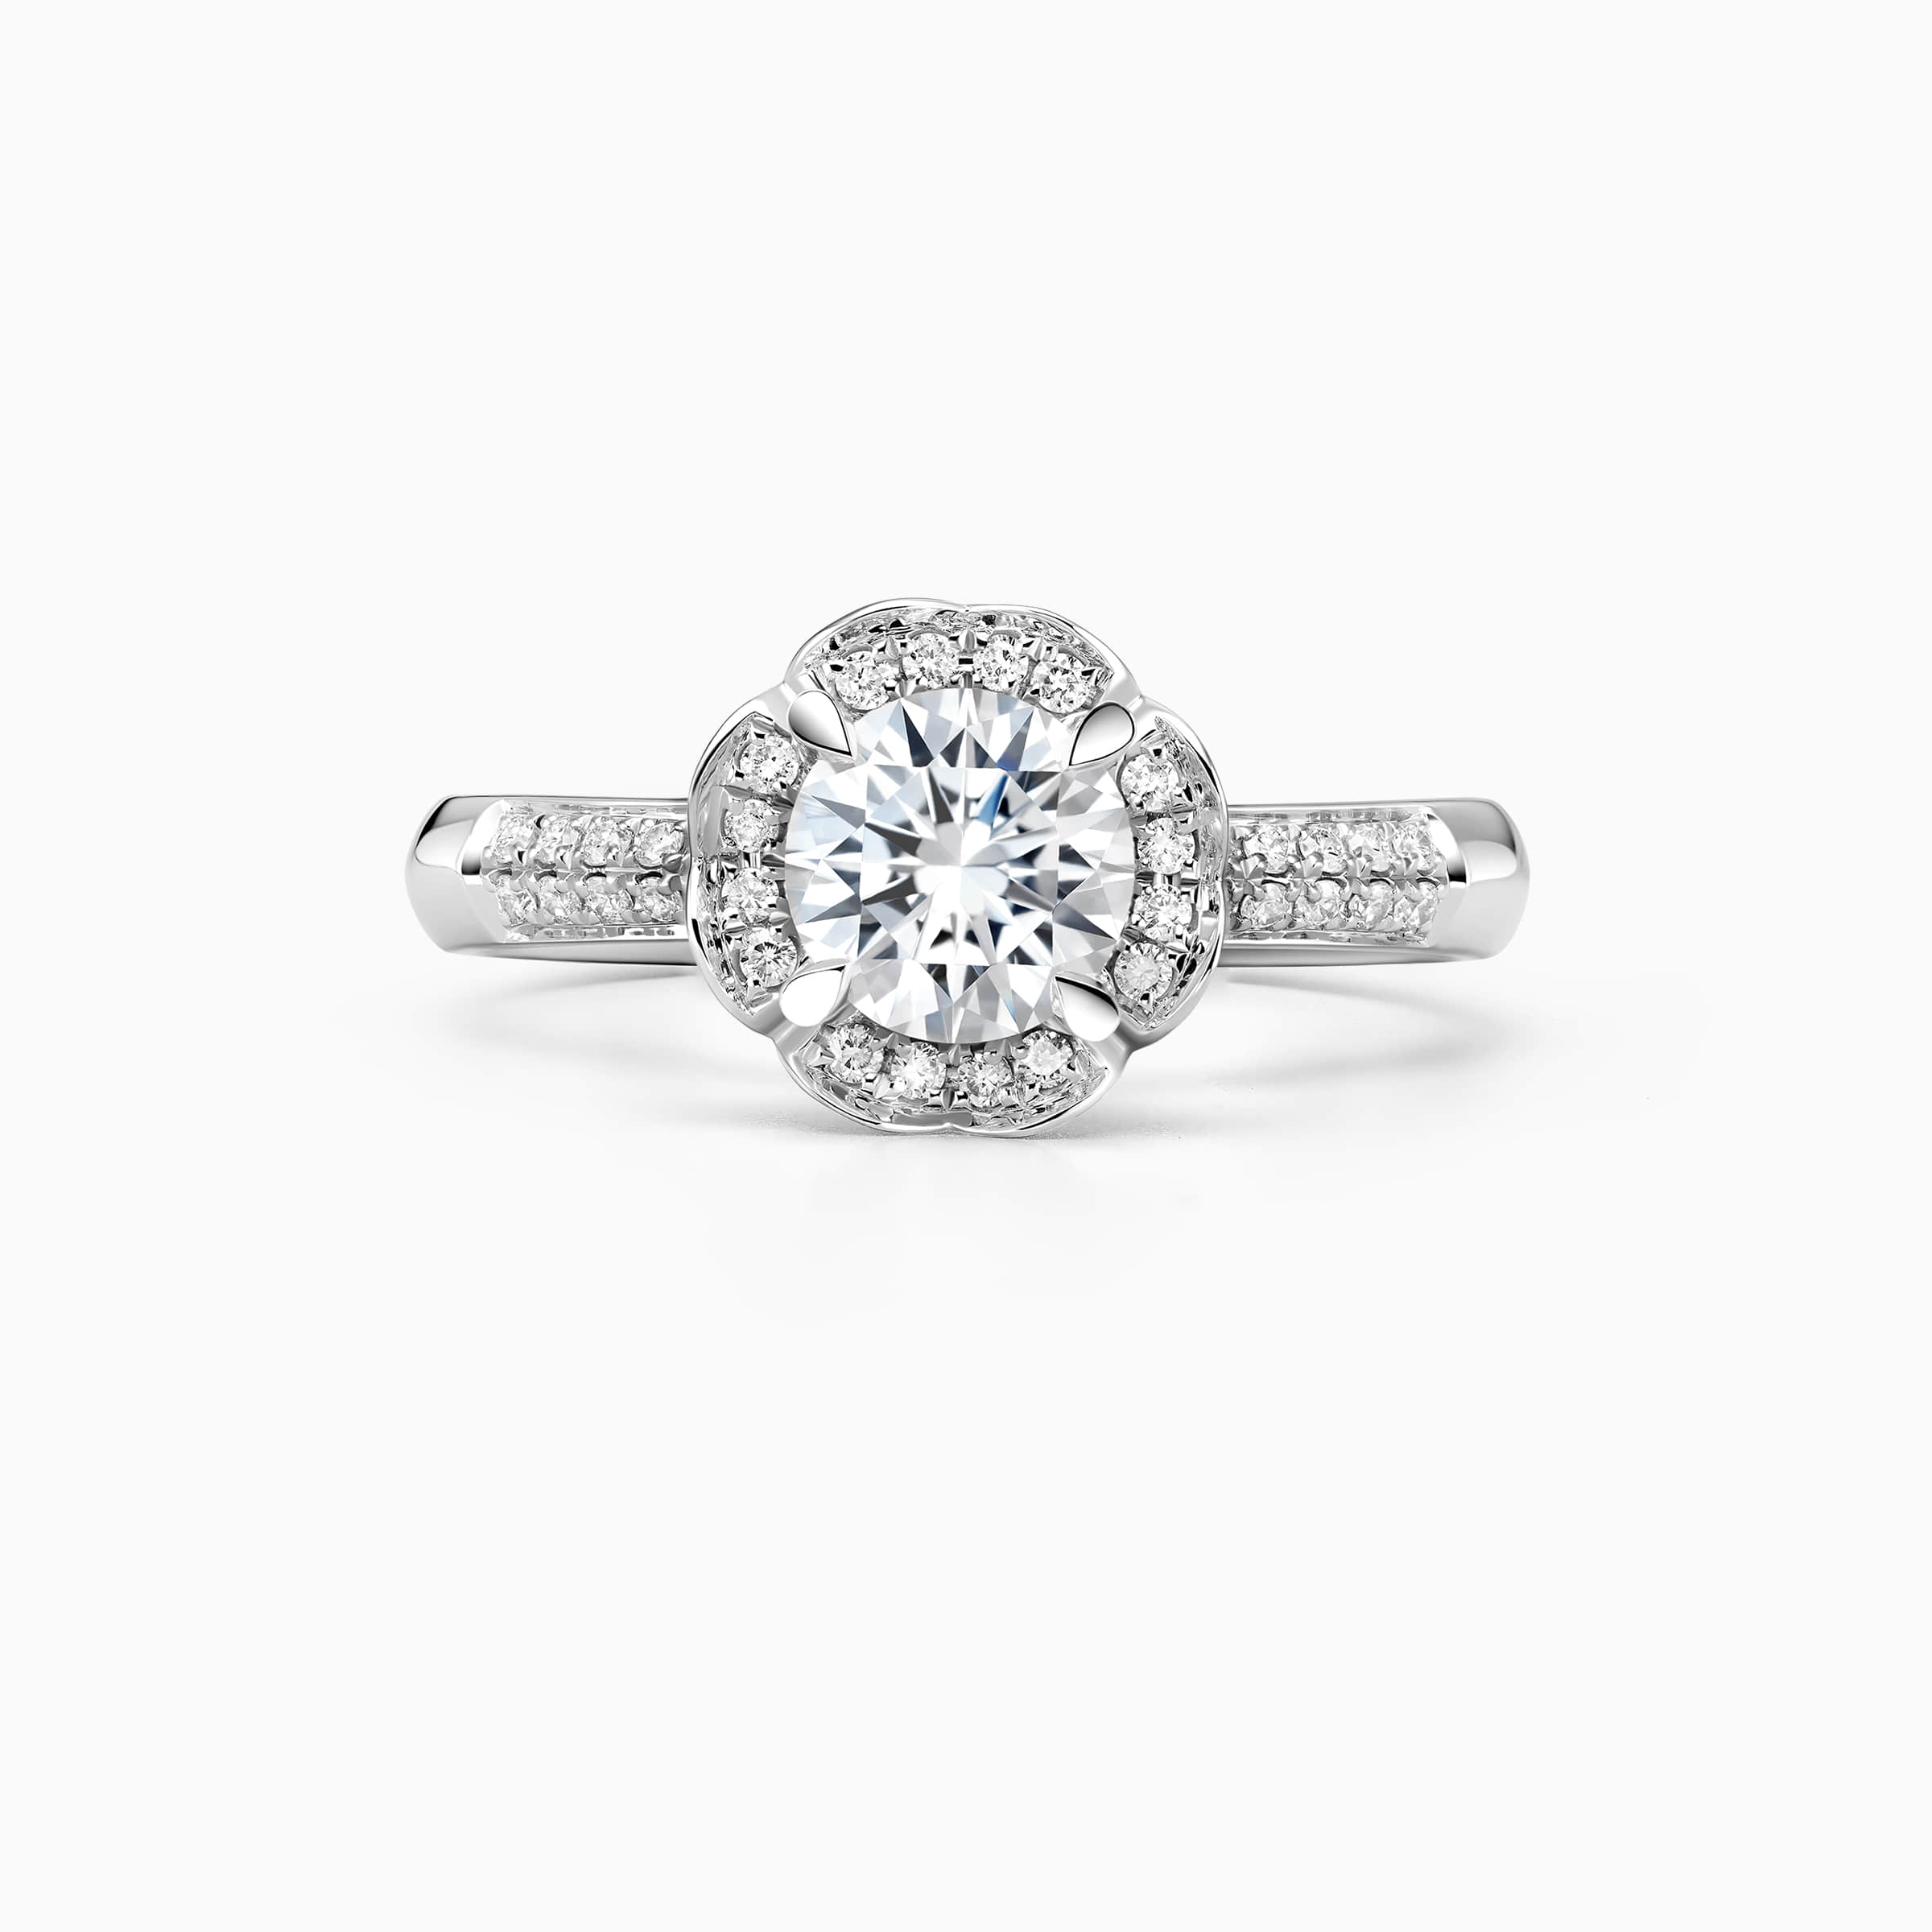 Darry Ring designer engagement ring in white gold